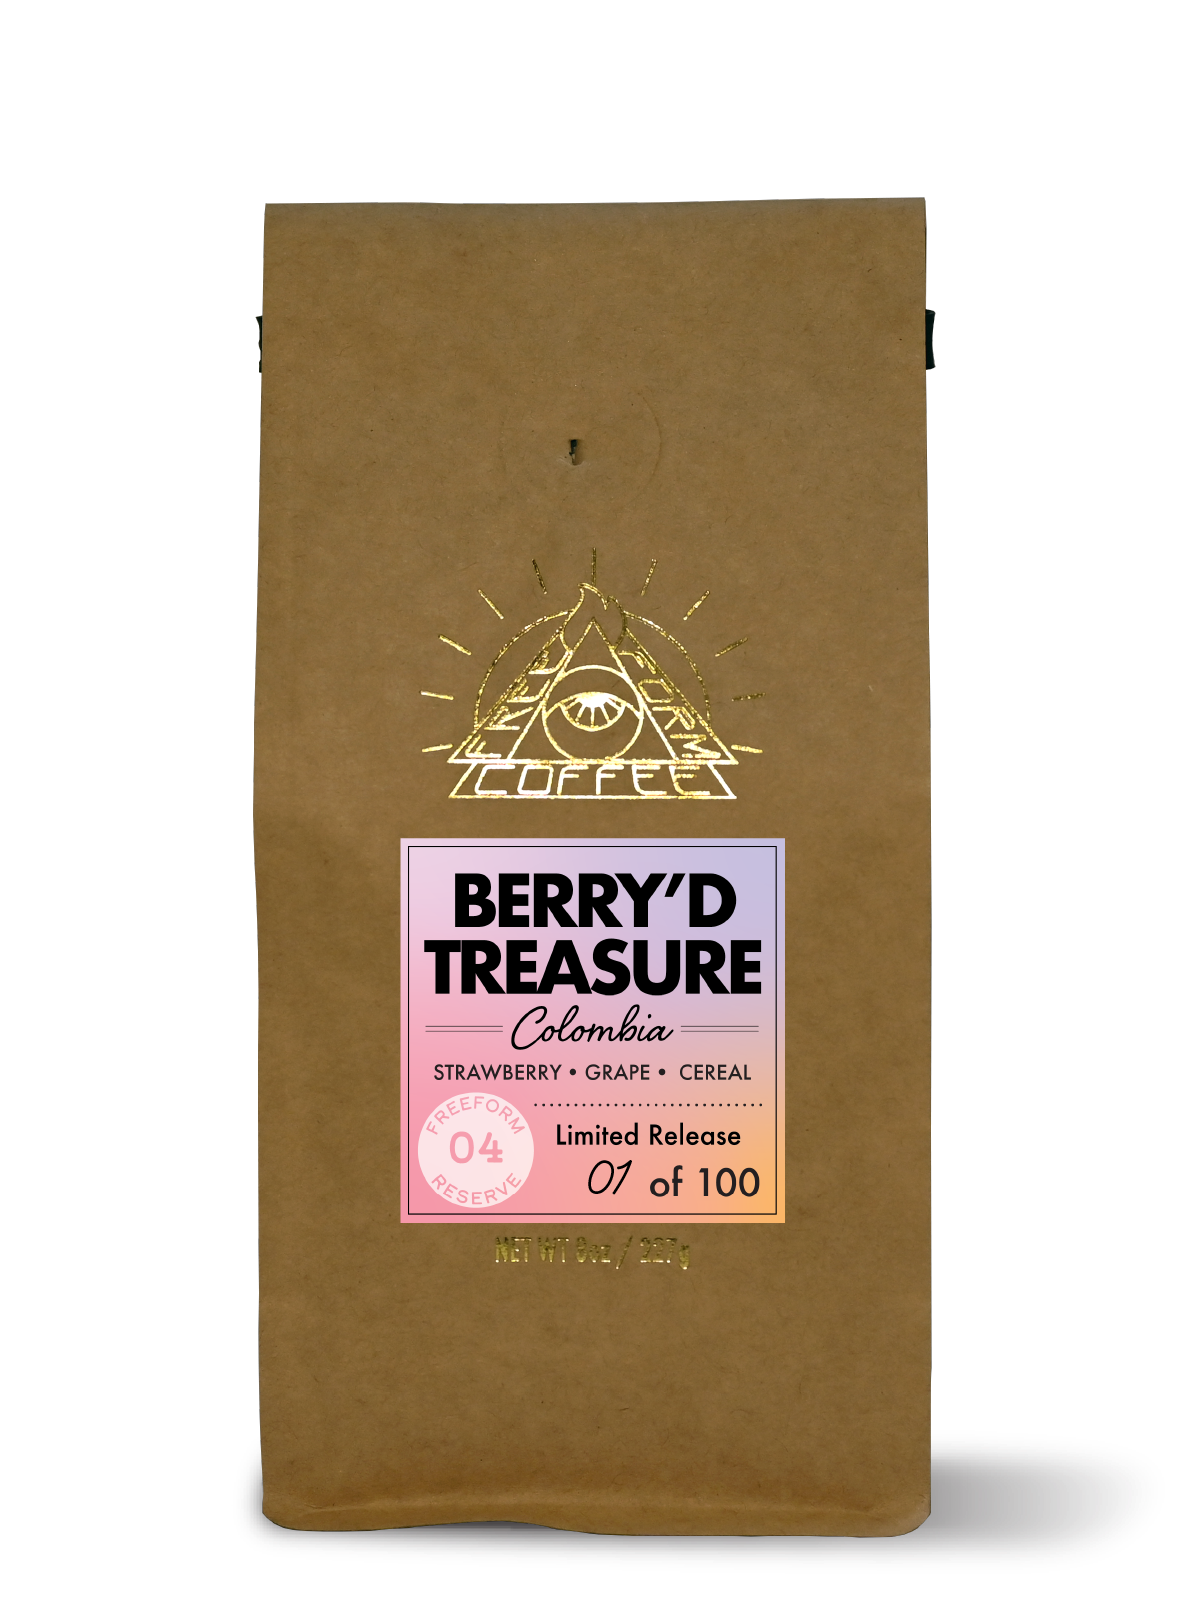 Berry'd Treasure - Colombia Co-Ferment